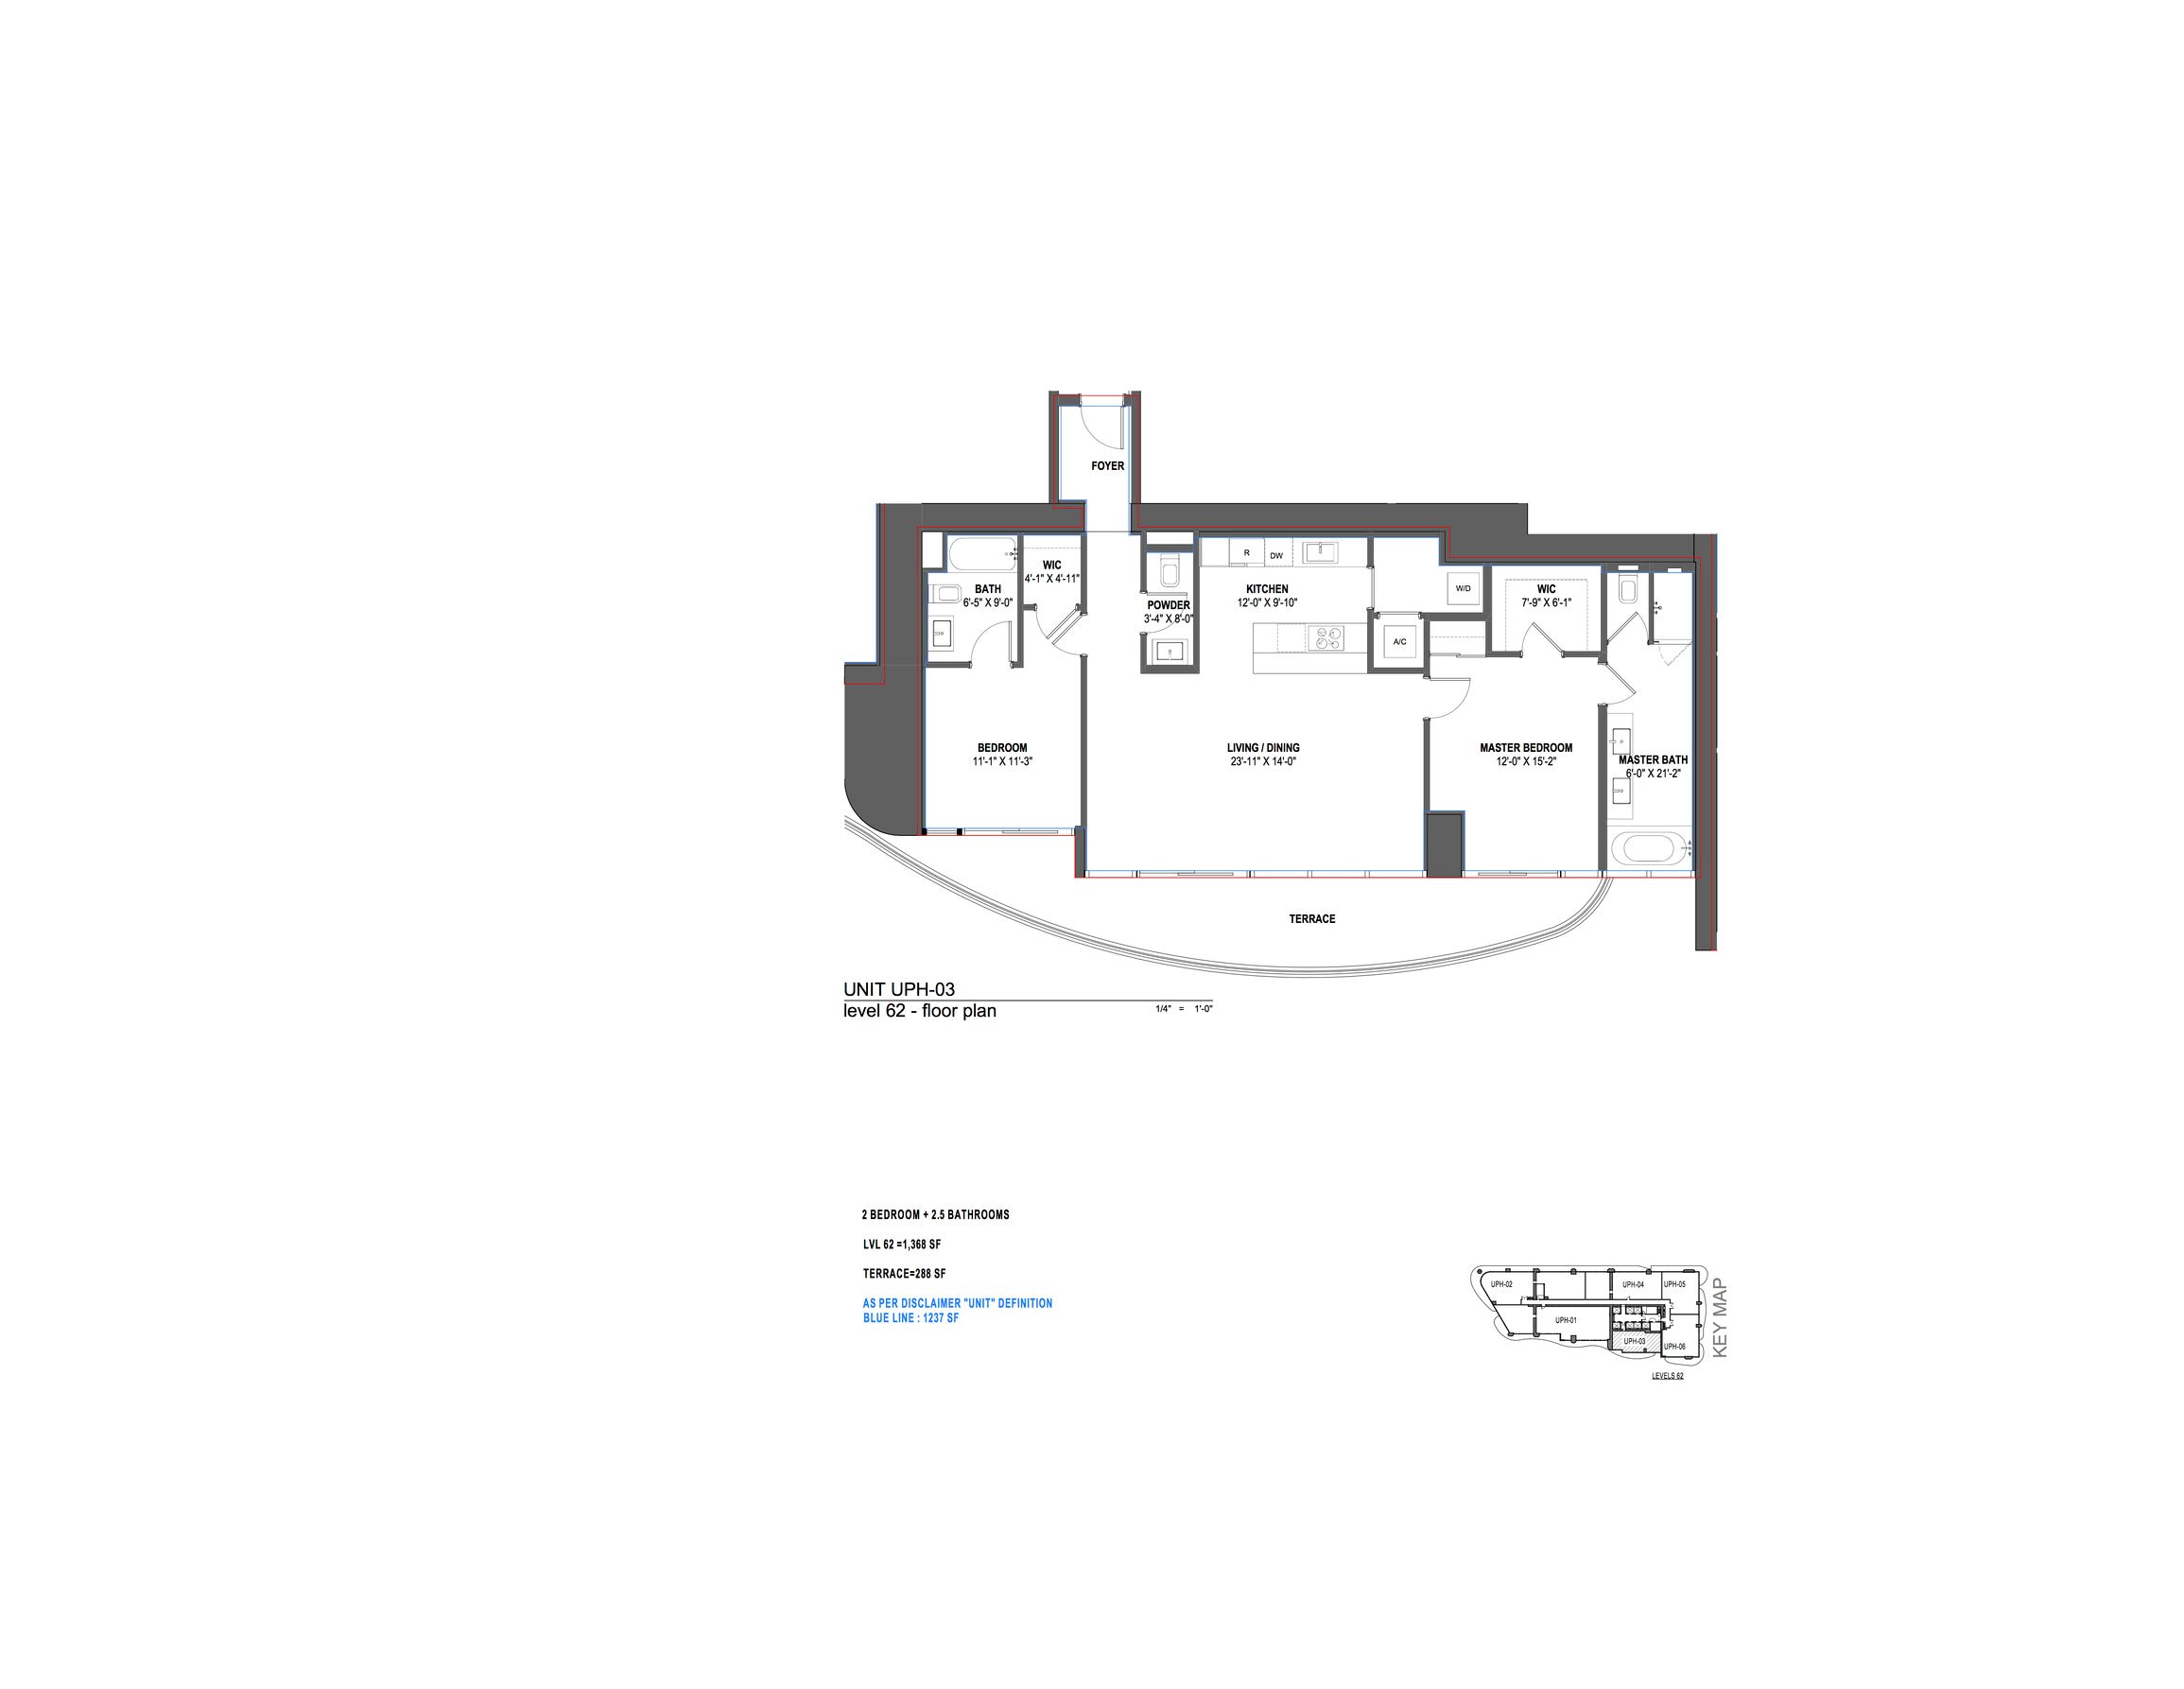 Brickell Flatiron Upper Penthouse 03 Level 62